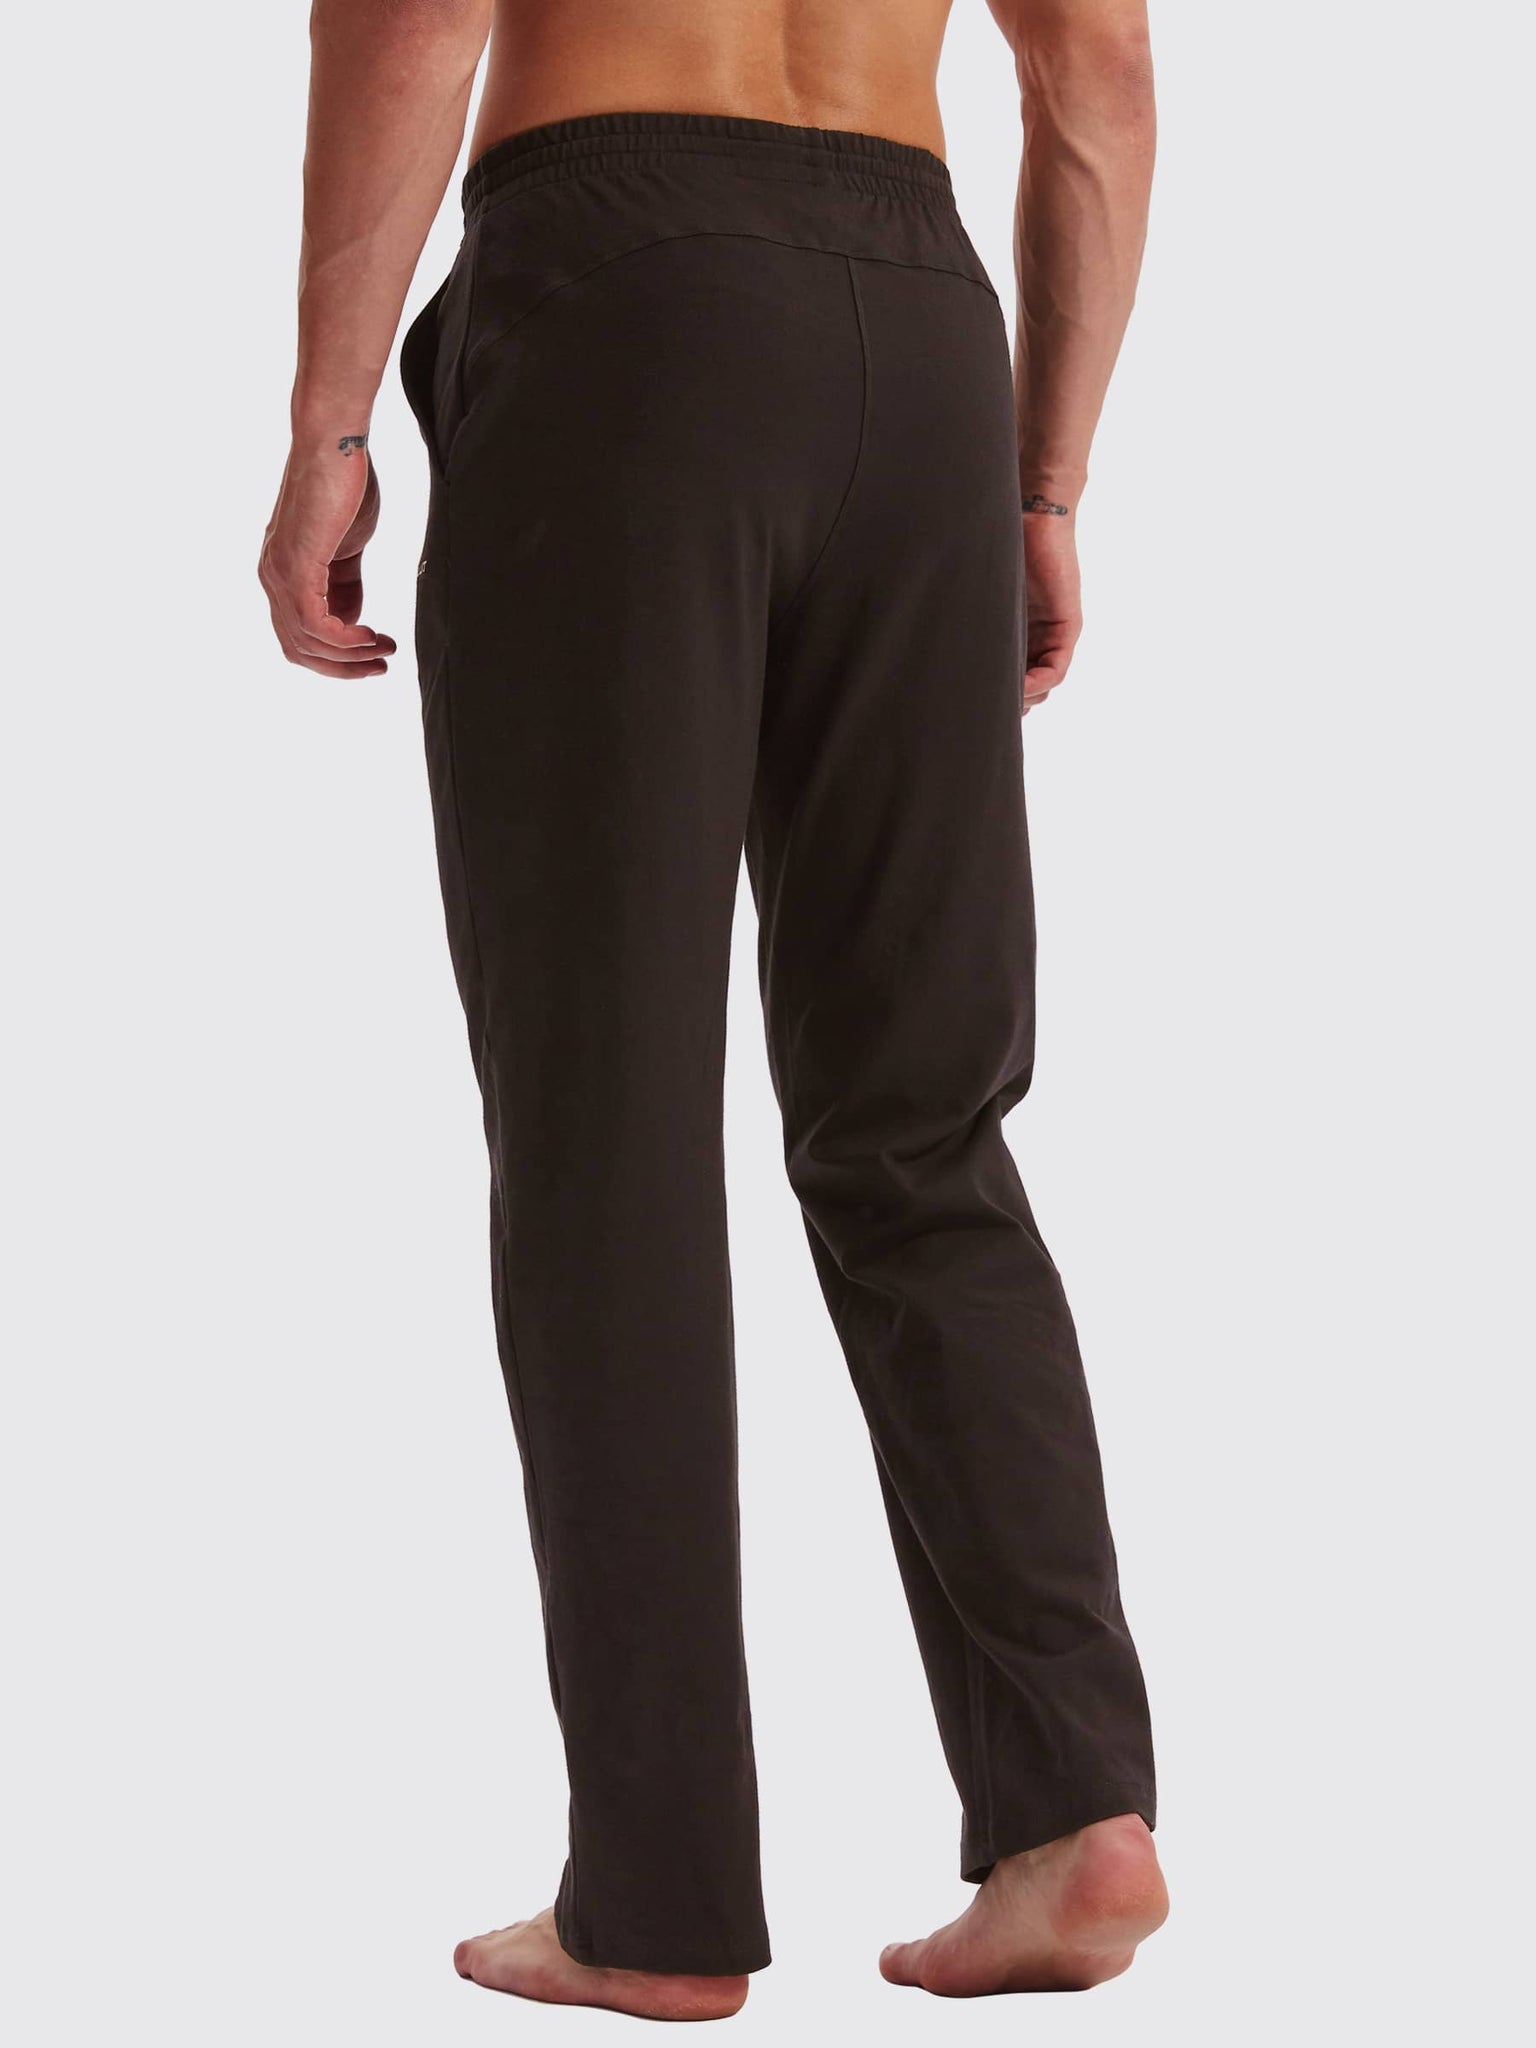 Men's Cotton Yoga Balance Sweatpants_Brown_model5